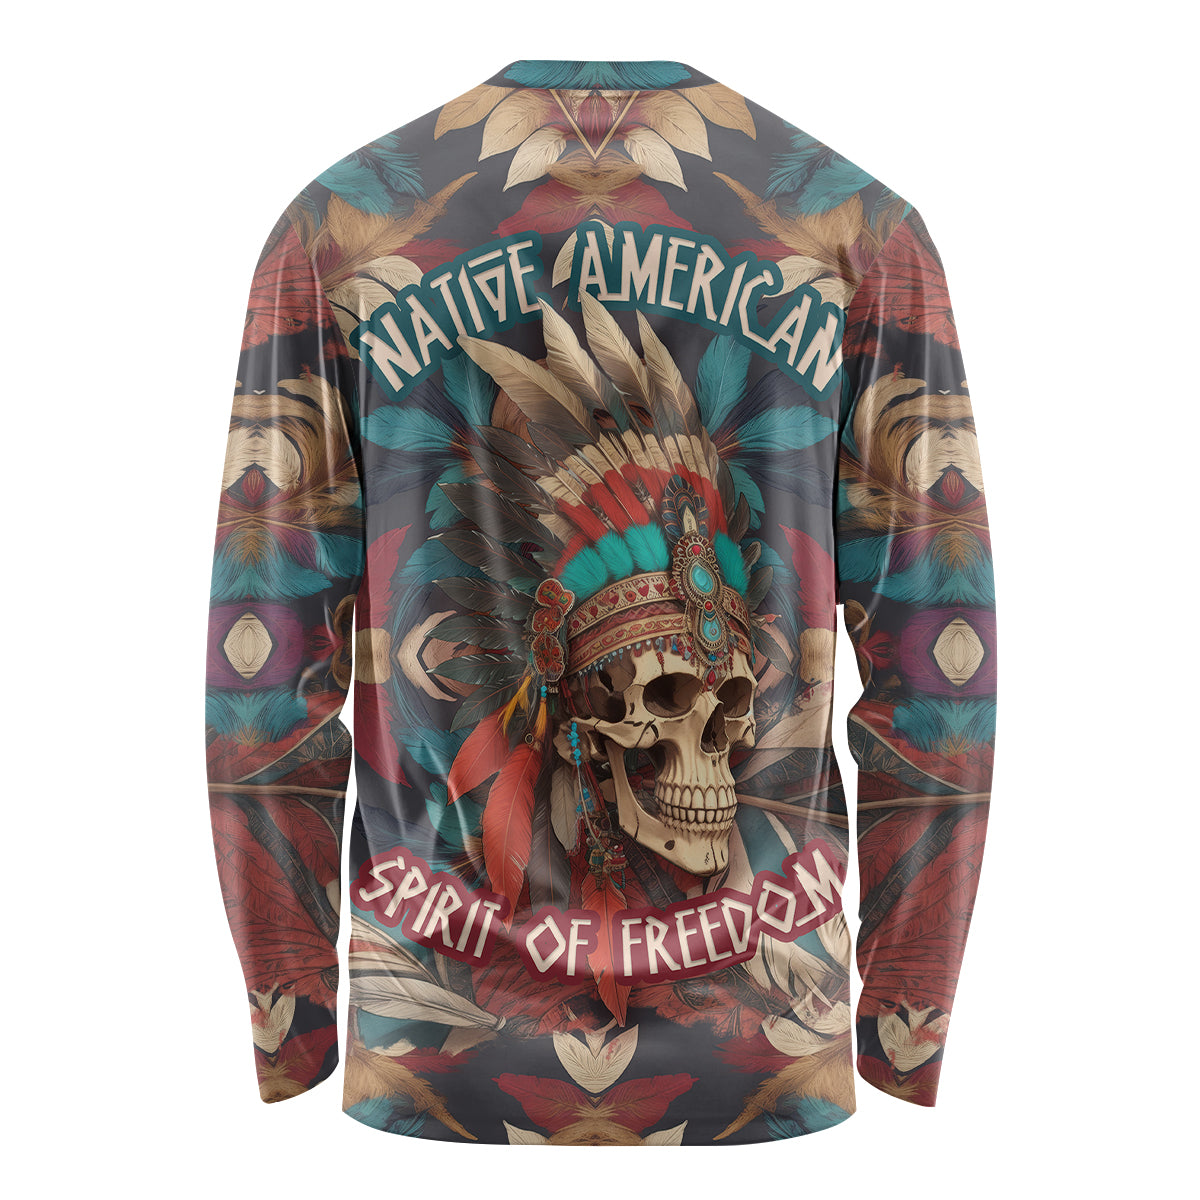 native-american-skull-long-sleeve-shirt-native-merican-spirit-of-freedom